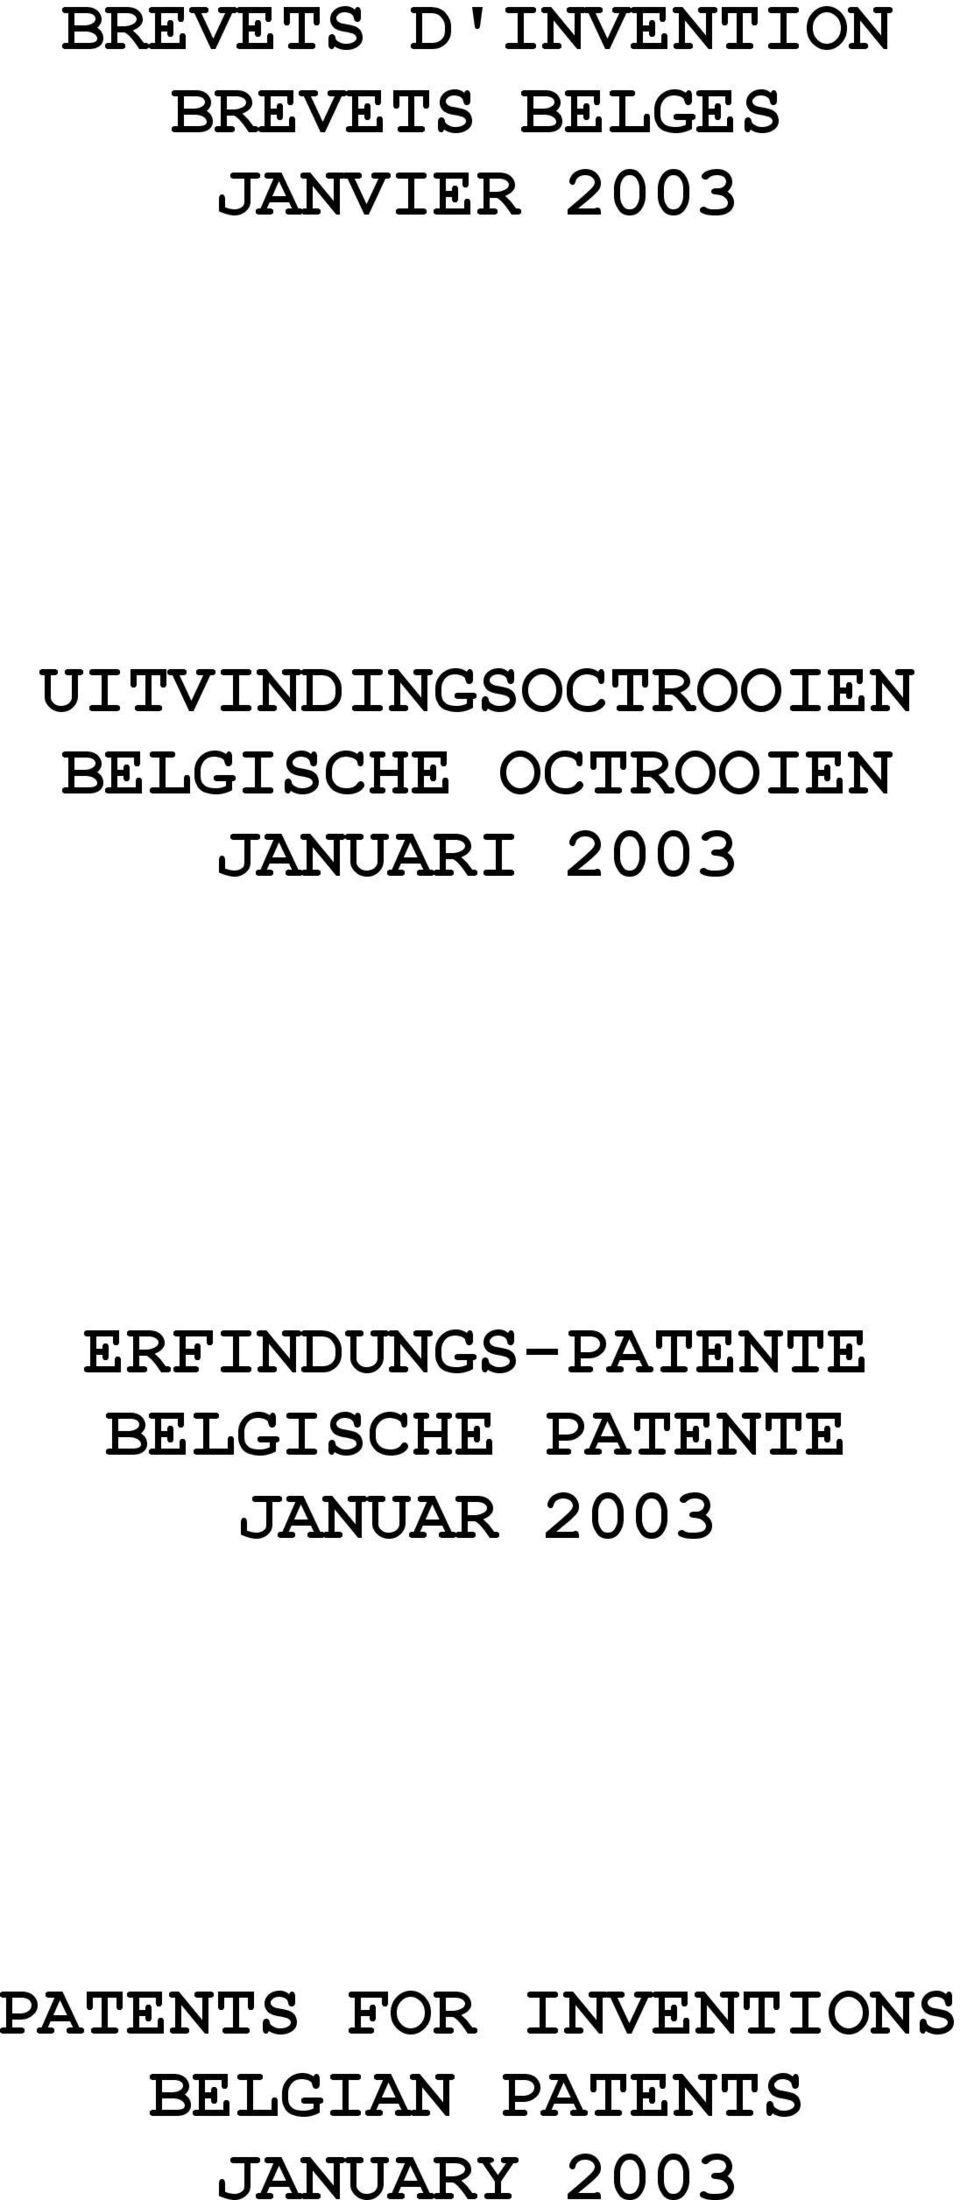 2003 ERFINDUNGS-PATENTE BELGISCHE PATENTE JANUAR